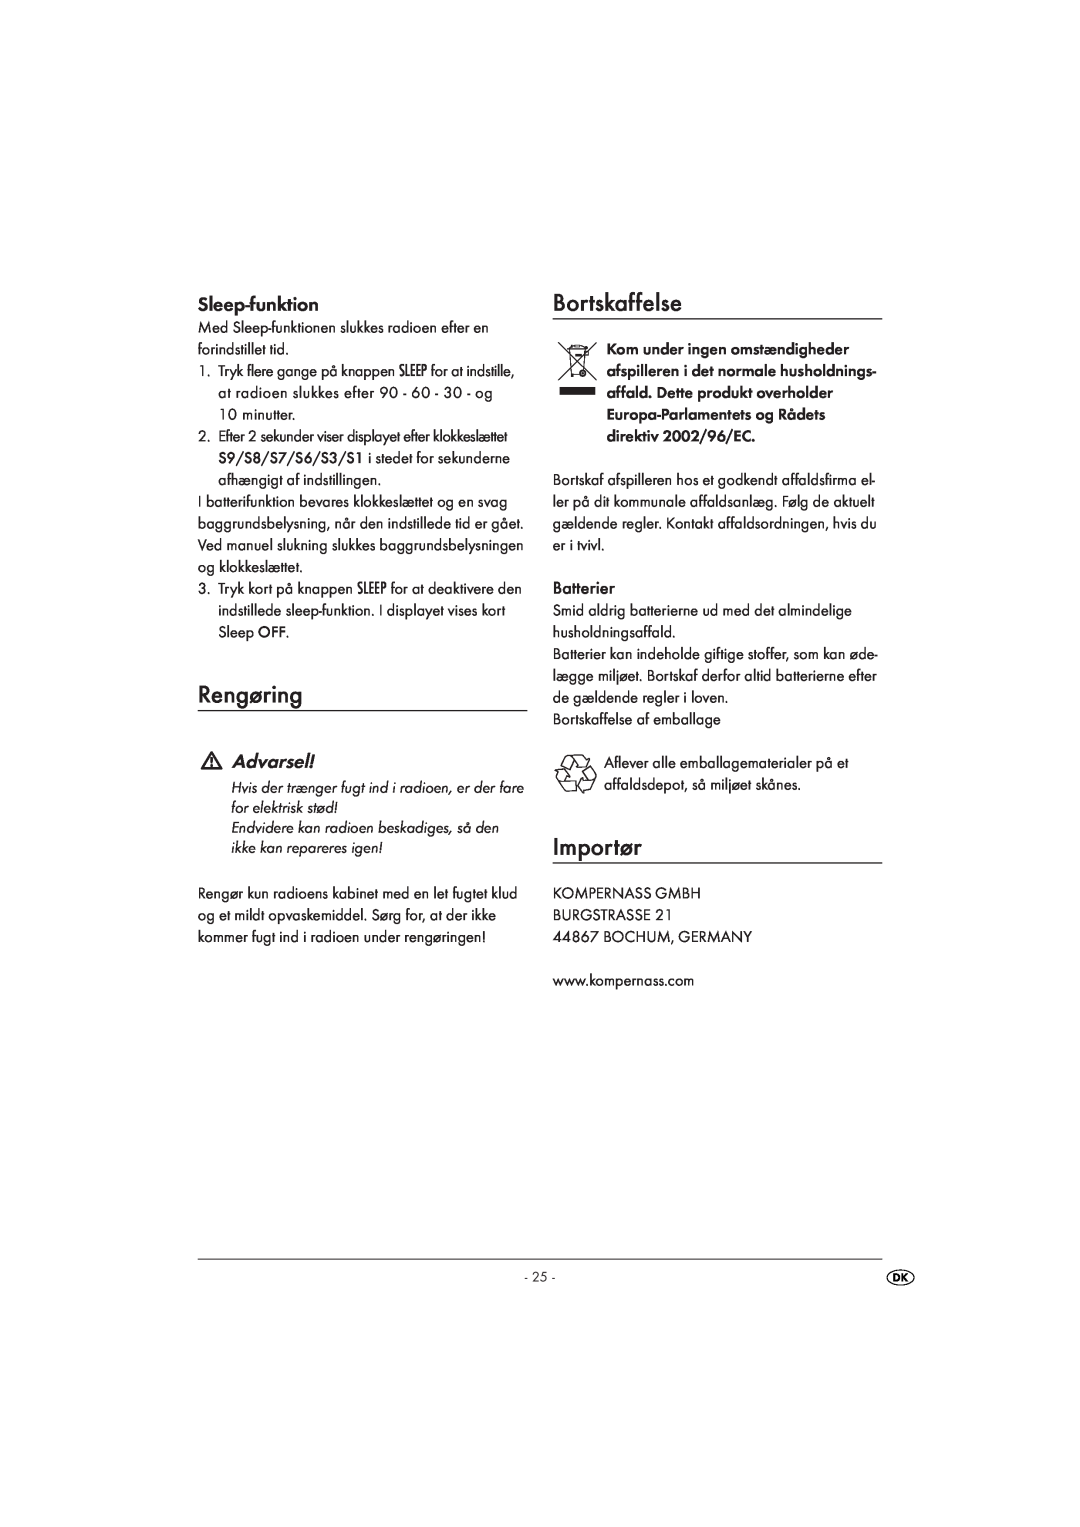 Kompernass KH 2314 manual Rengøring, Bortskaffelse, Importør, Sleep-funktion, Advarsel 